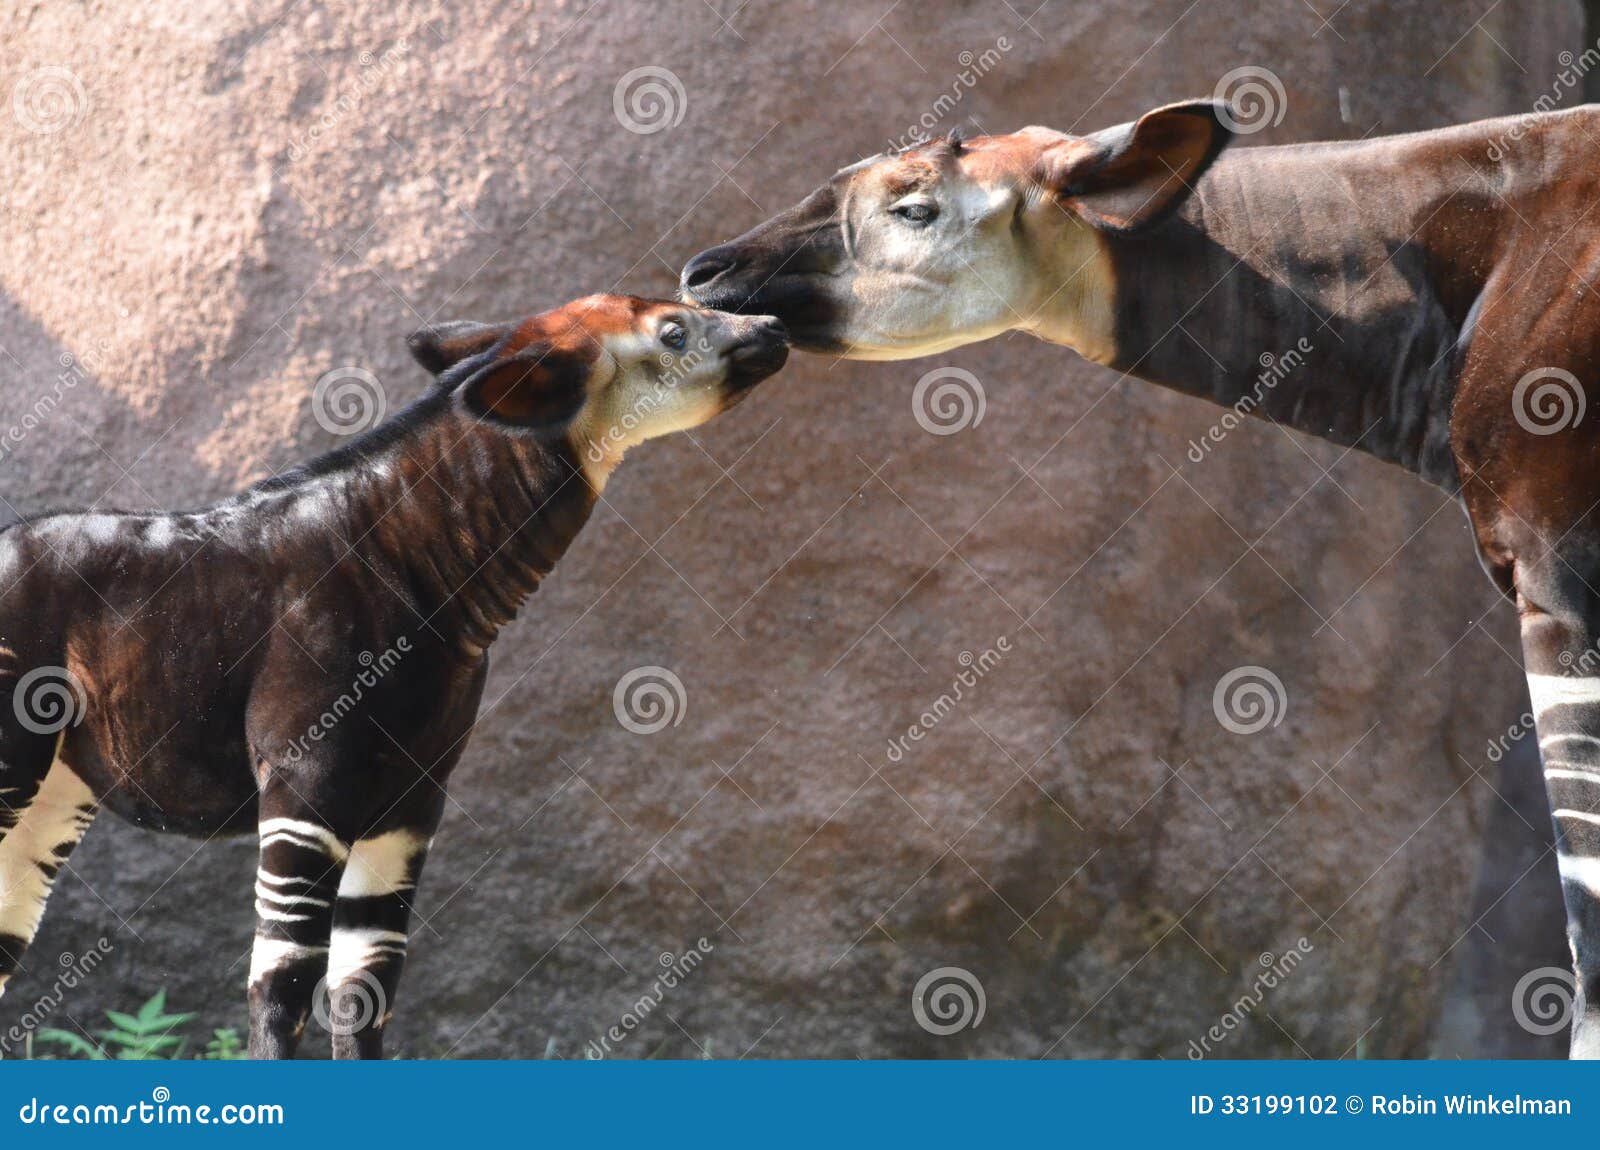 mother and baby okapi